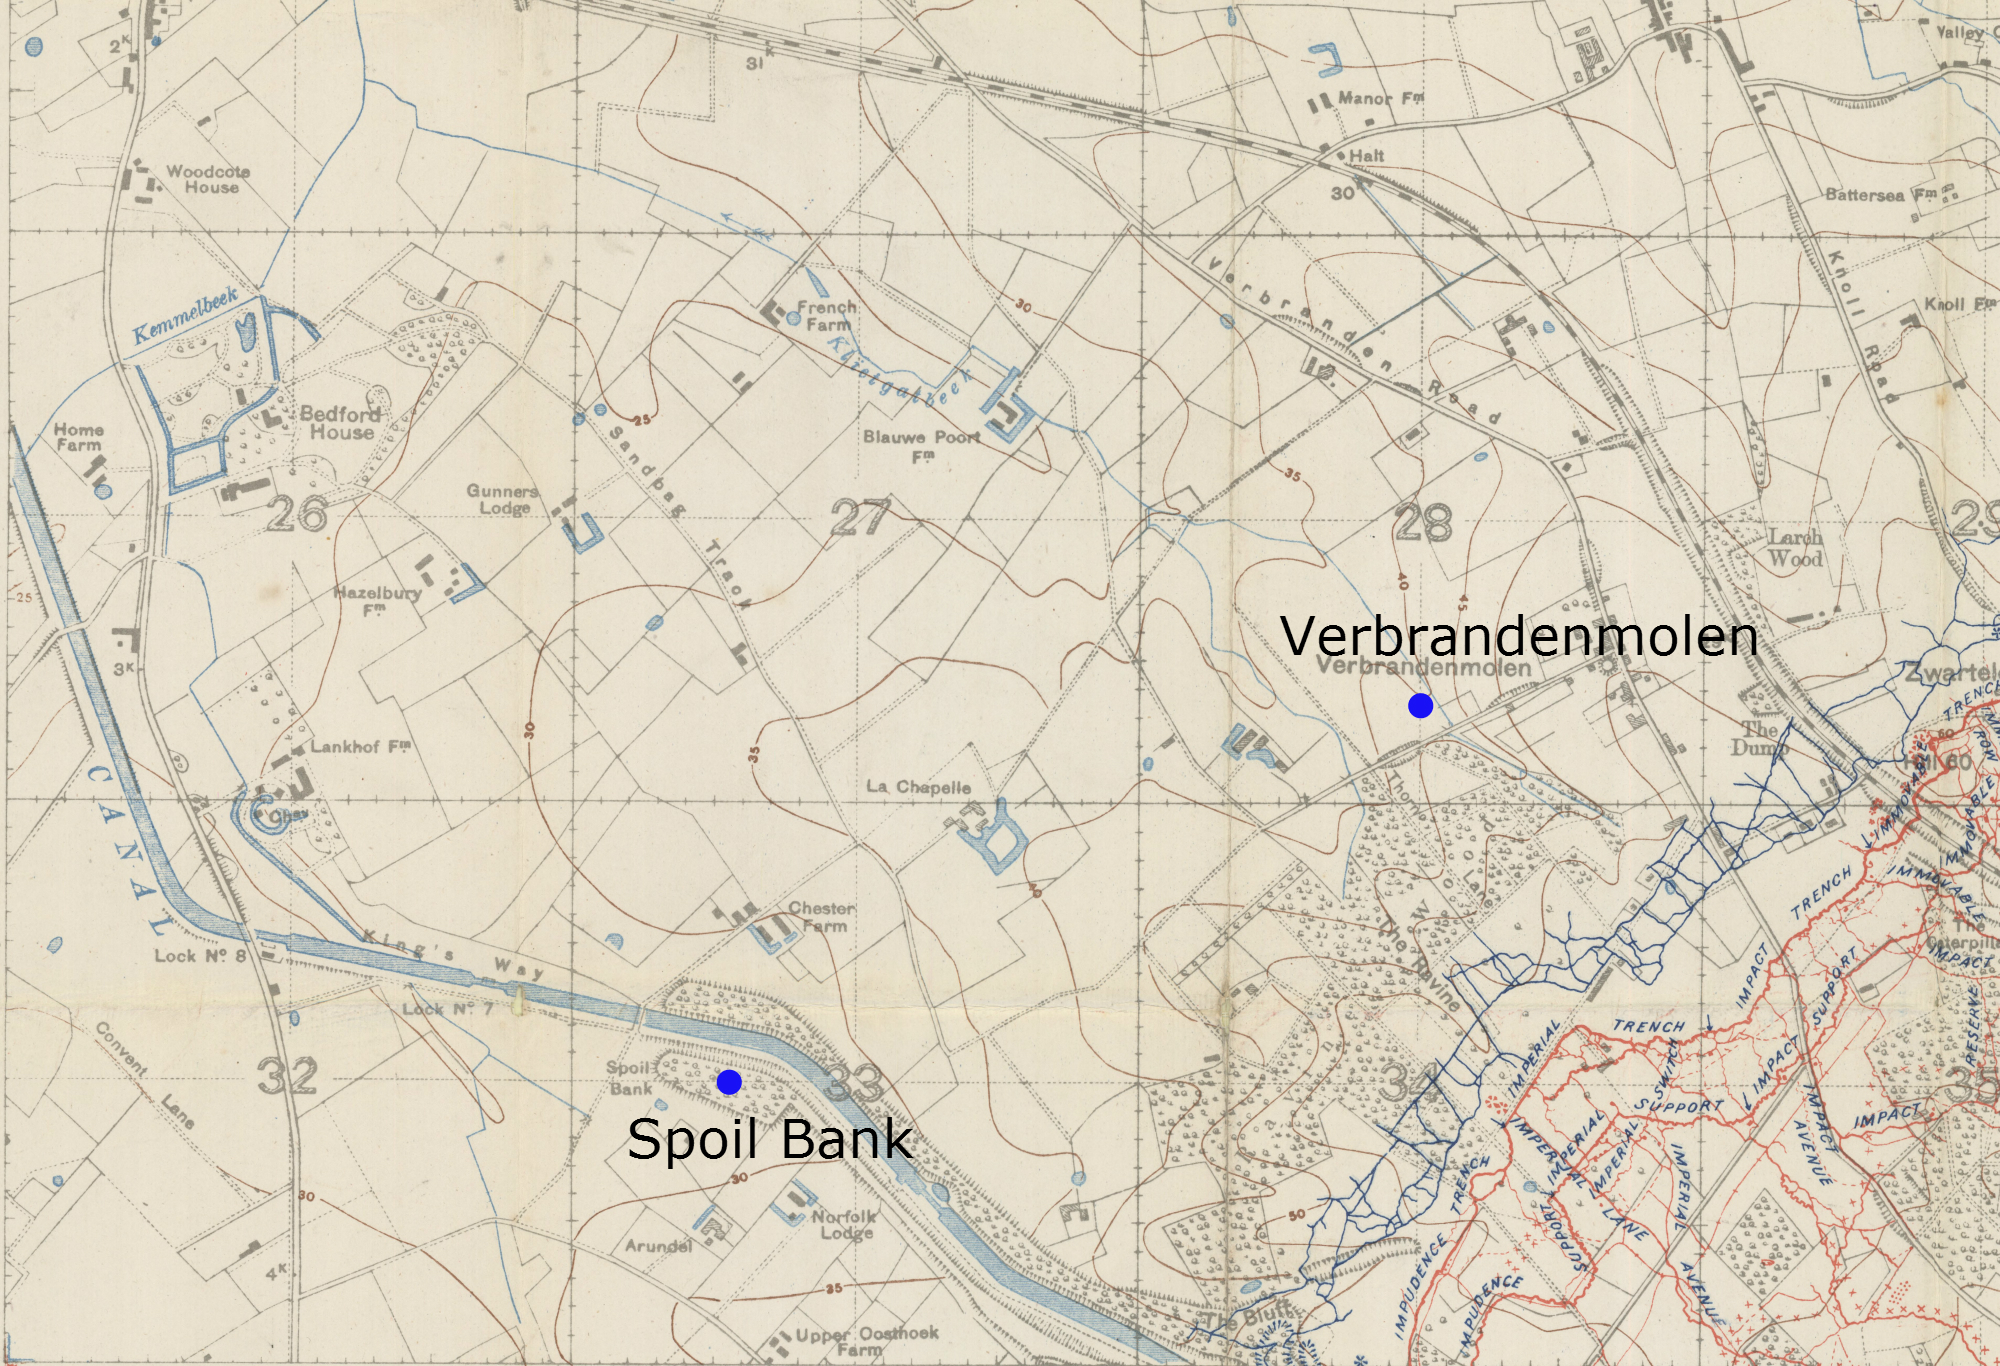 april 1917 map Spoil Bank and Verbrandenmolen